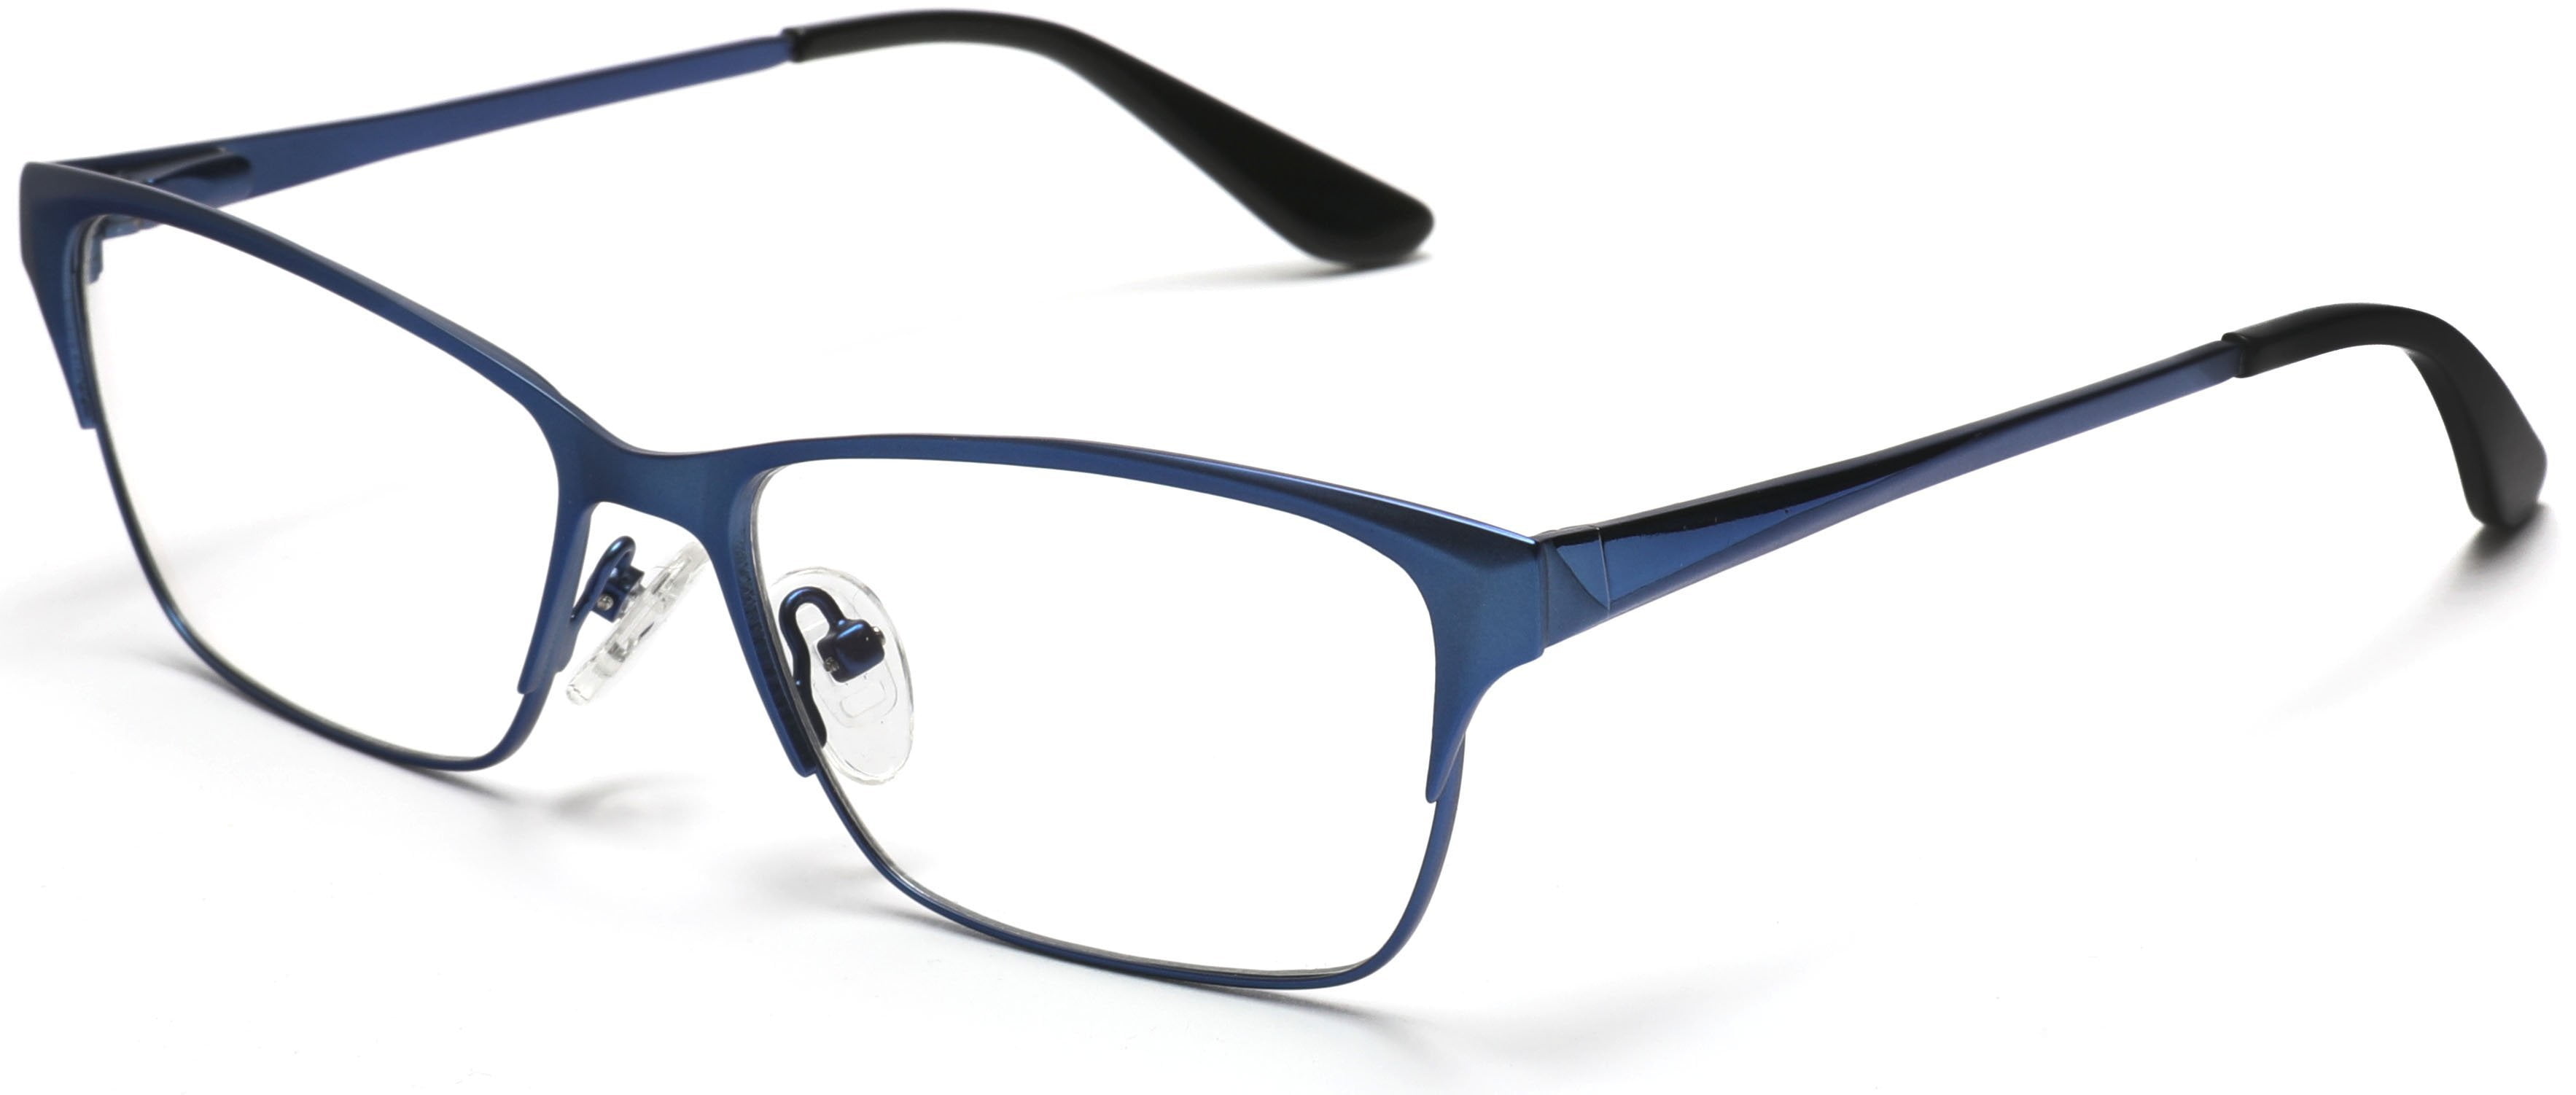 Tango Optics Browline Metal Eyeglasses Frame Luxe Rx Stainless Steel Mary Sherman Morgan Black